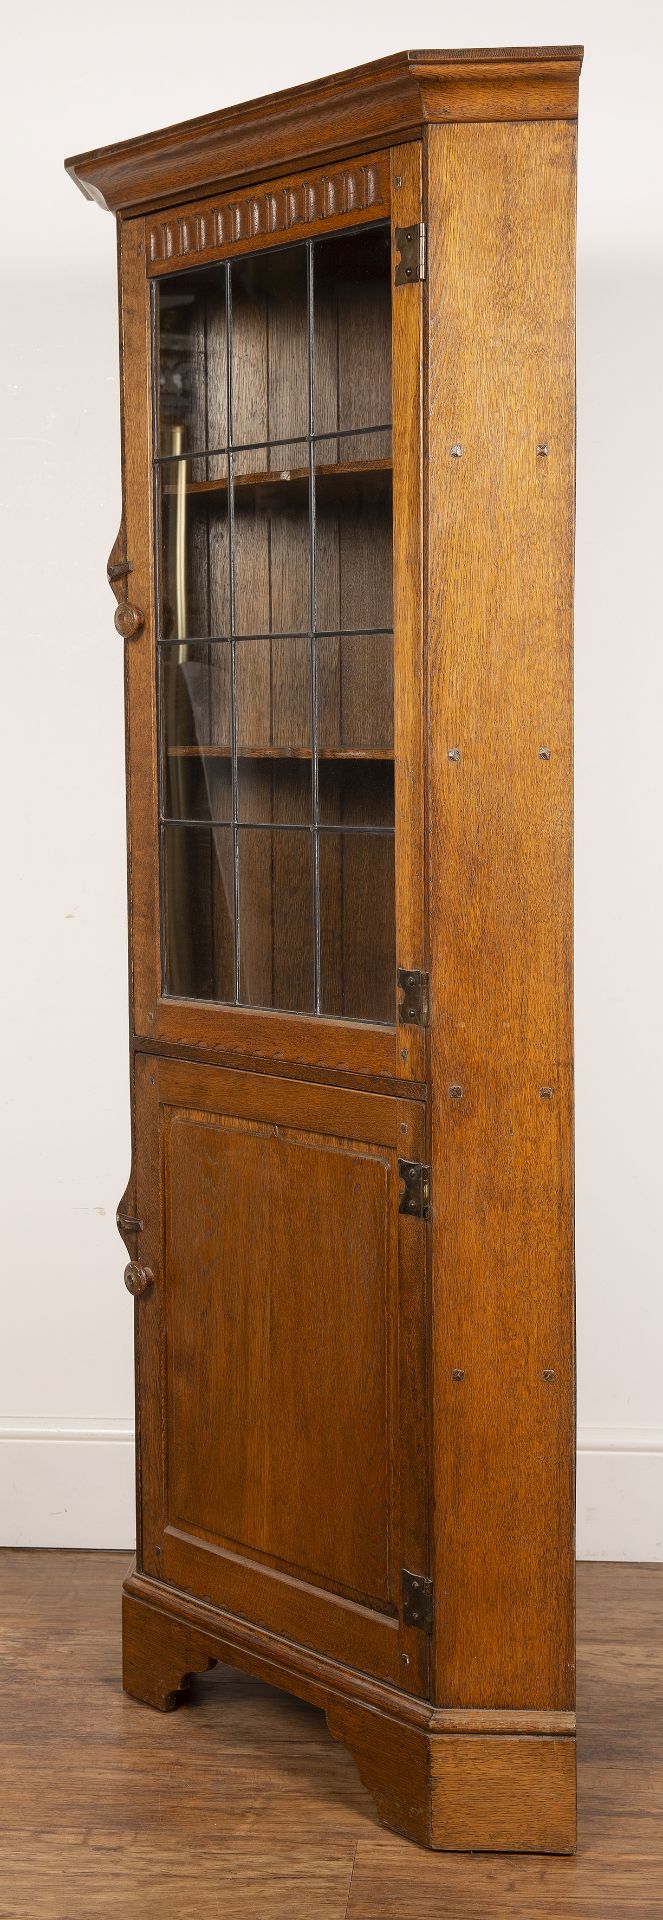 Yorkshire School oak, corner display cabinet, with astragal glazed door above a fielded panel - Image 4 of 5